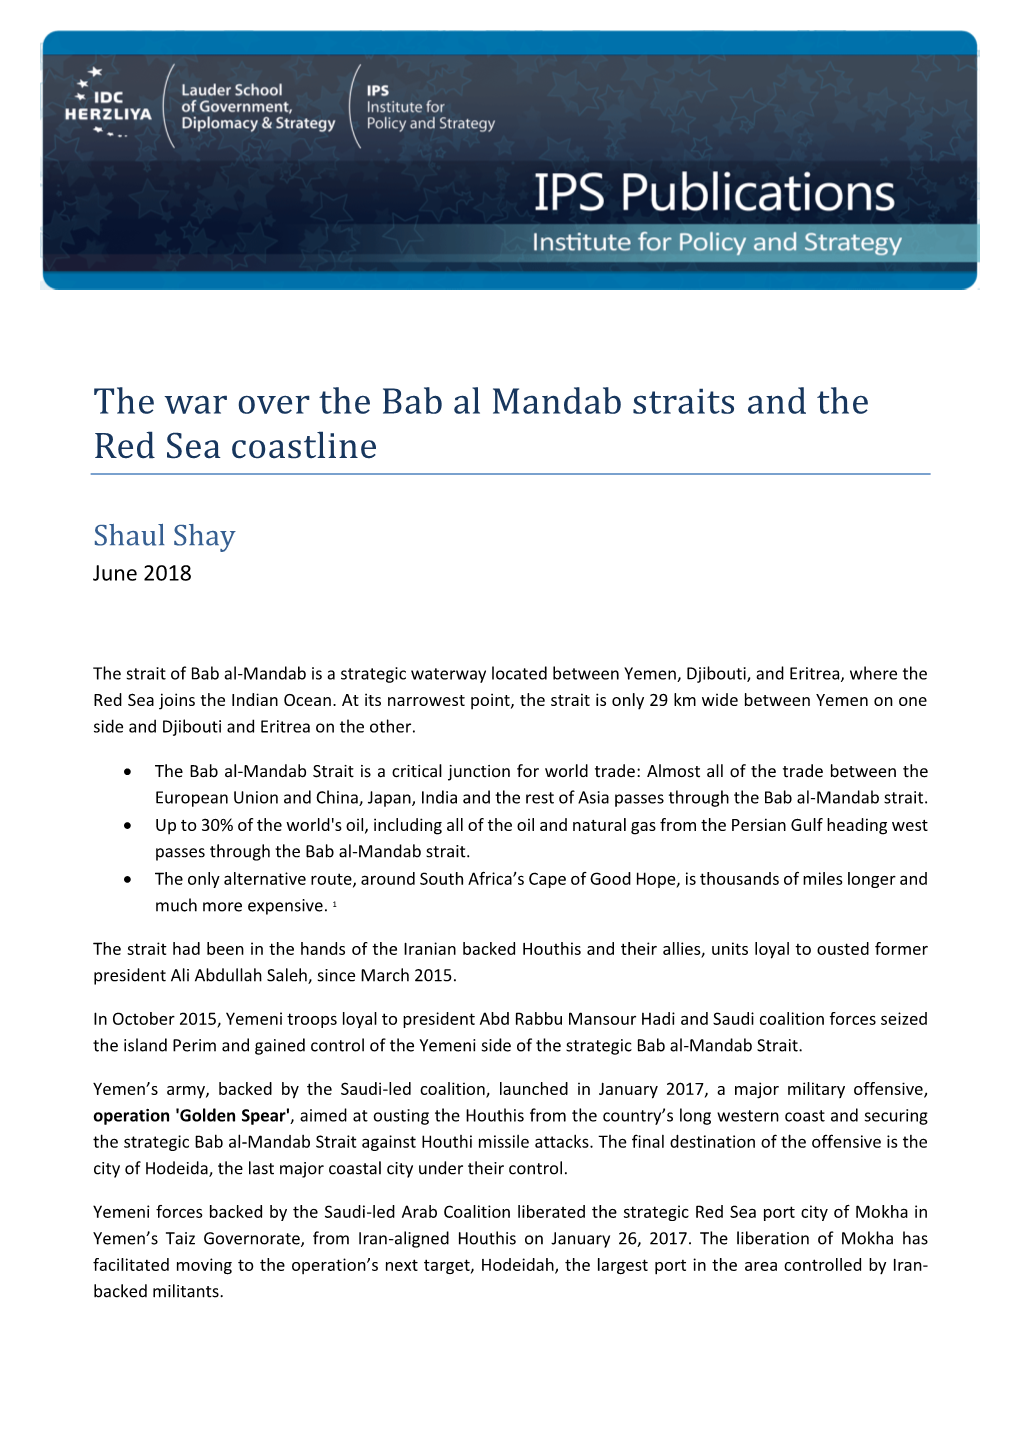 The War Over the Bab Al Mandab Straits and the Red Sea Coastline